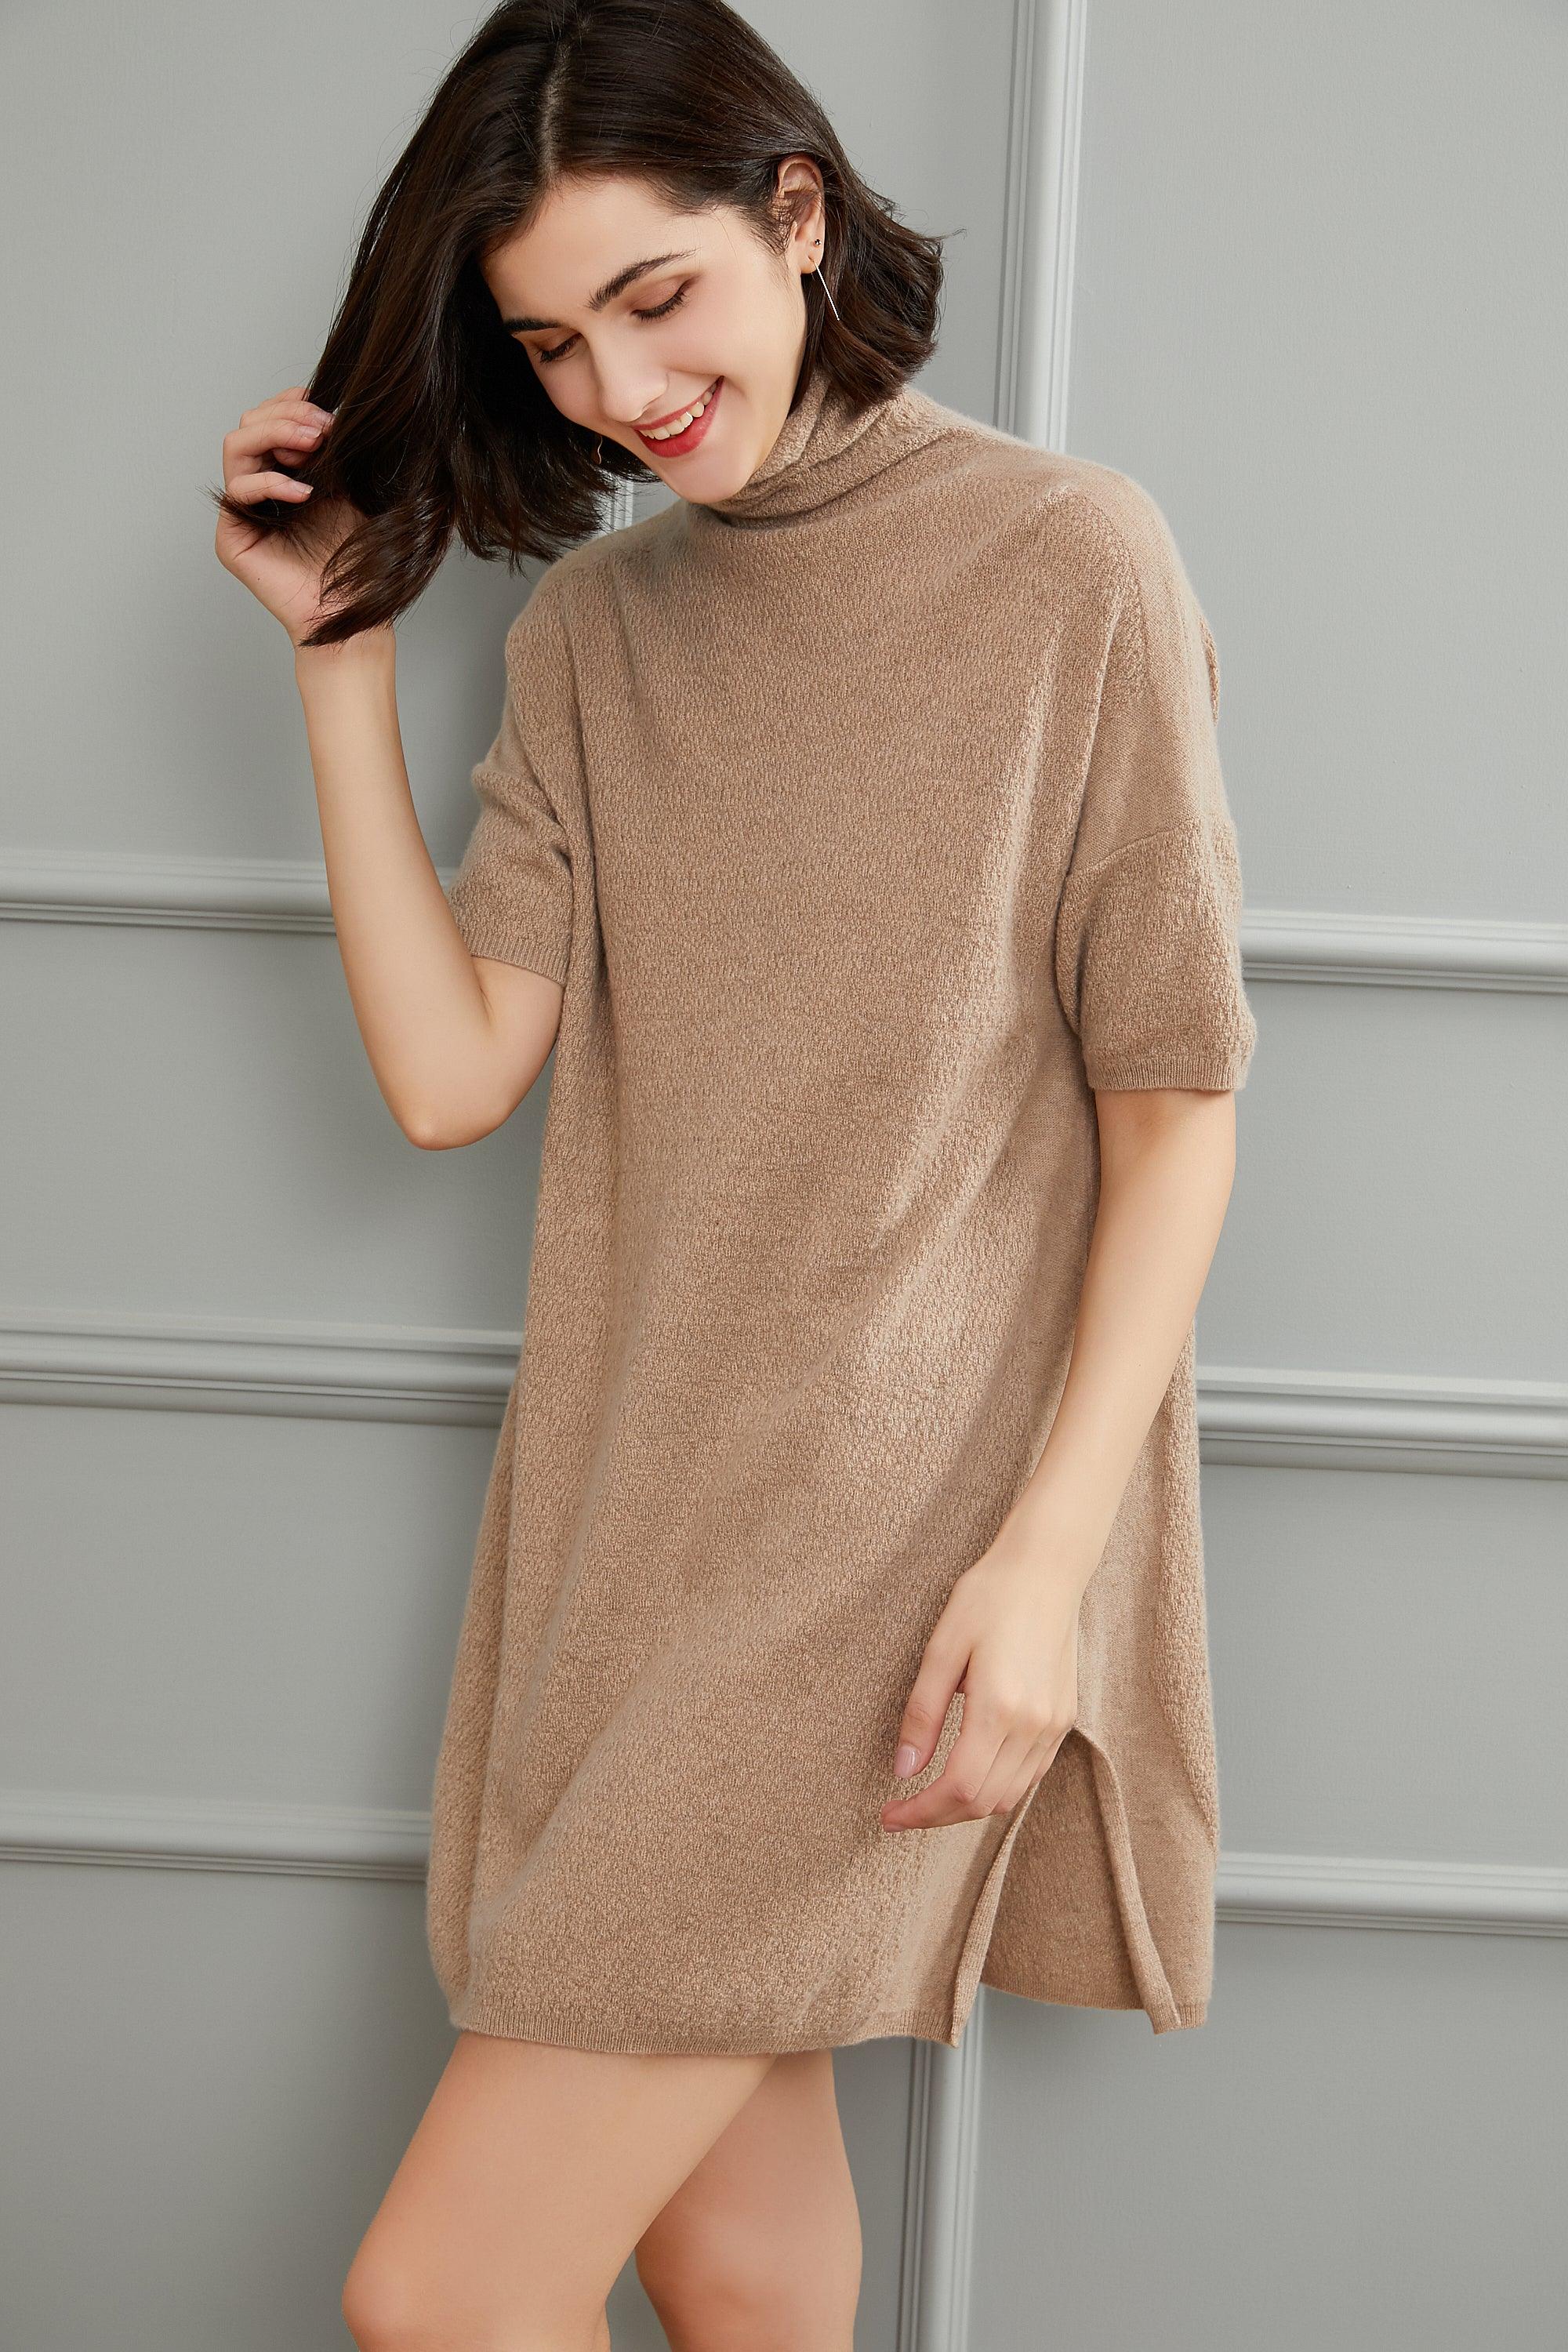 100% pure cashmere half sleeve turtleneck dress for women's classice  oversized – Lamycashmere